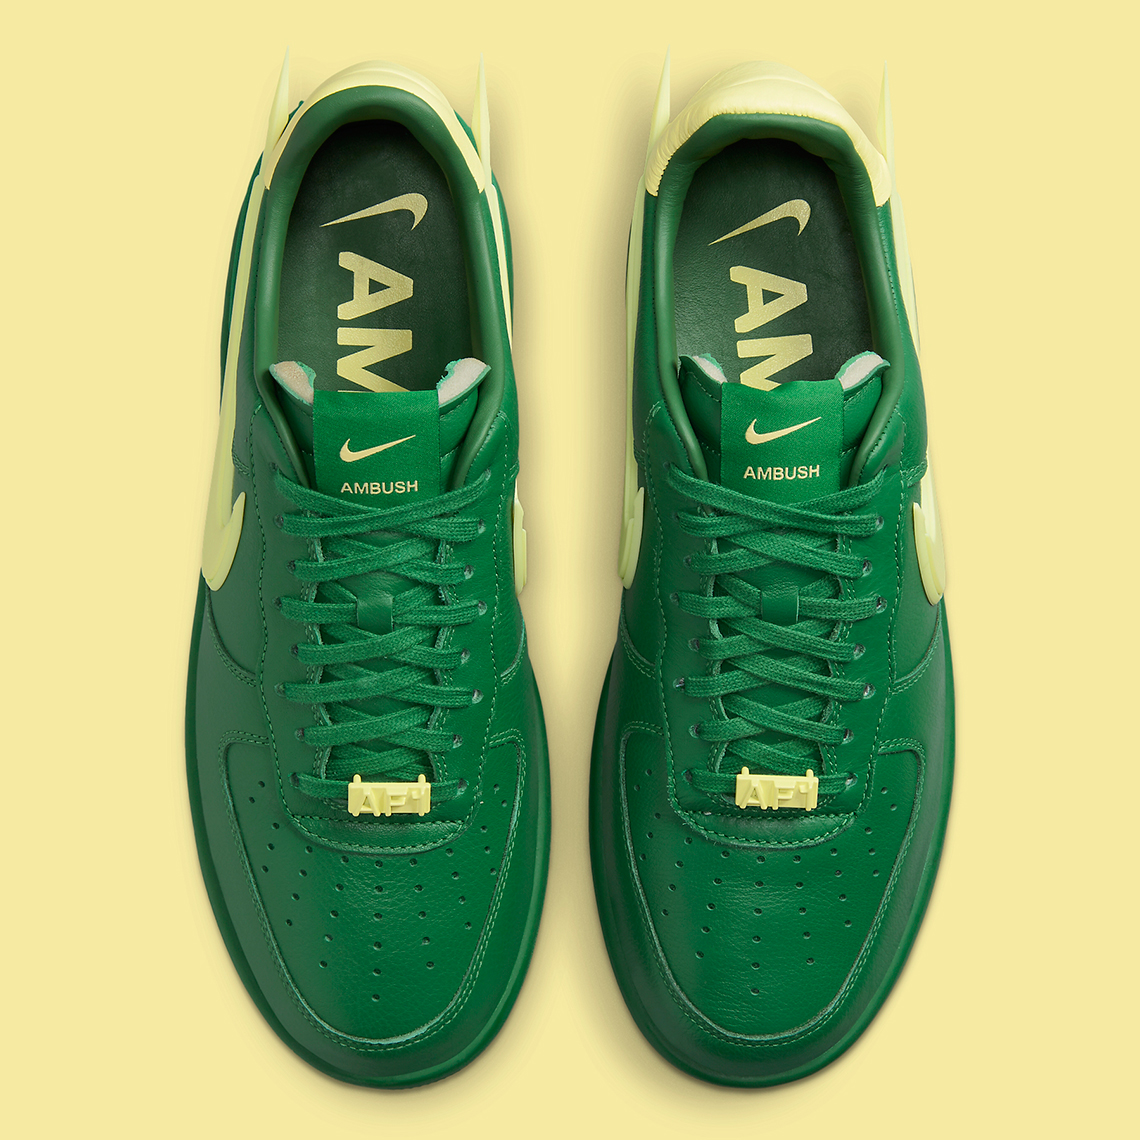 AMBUSH x Nike Air Force 1 Low Pine Green Drops December 16th - Sneaker News